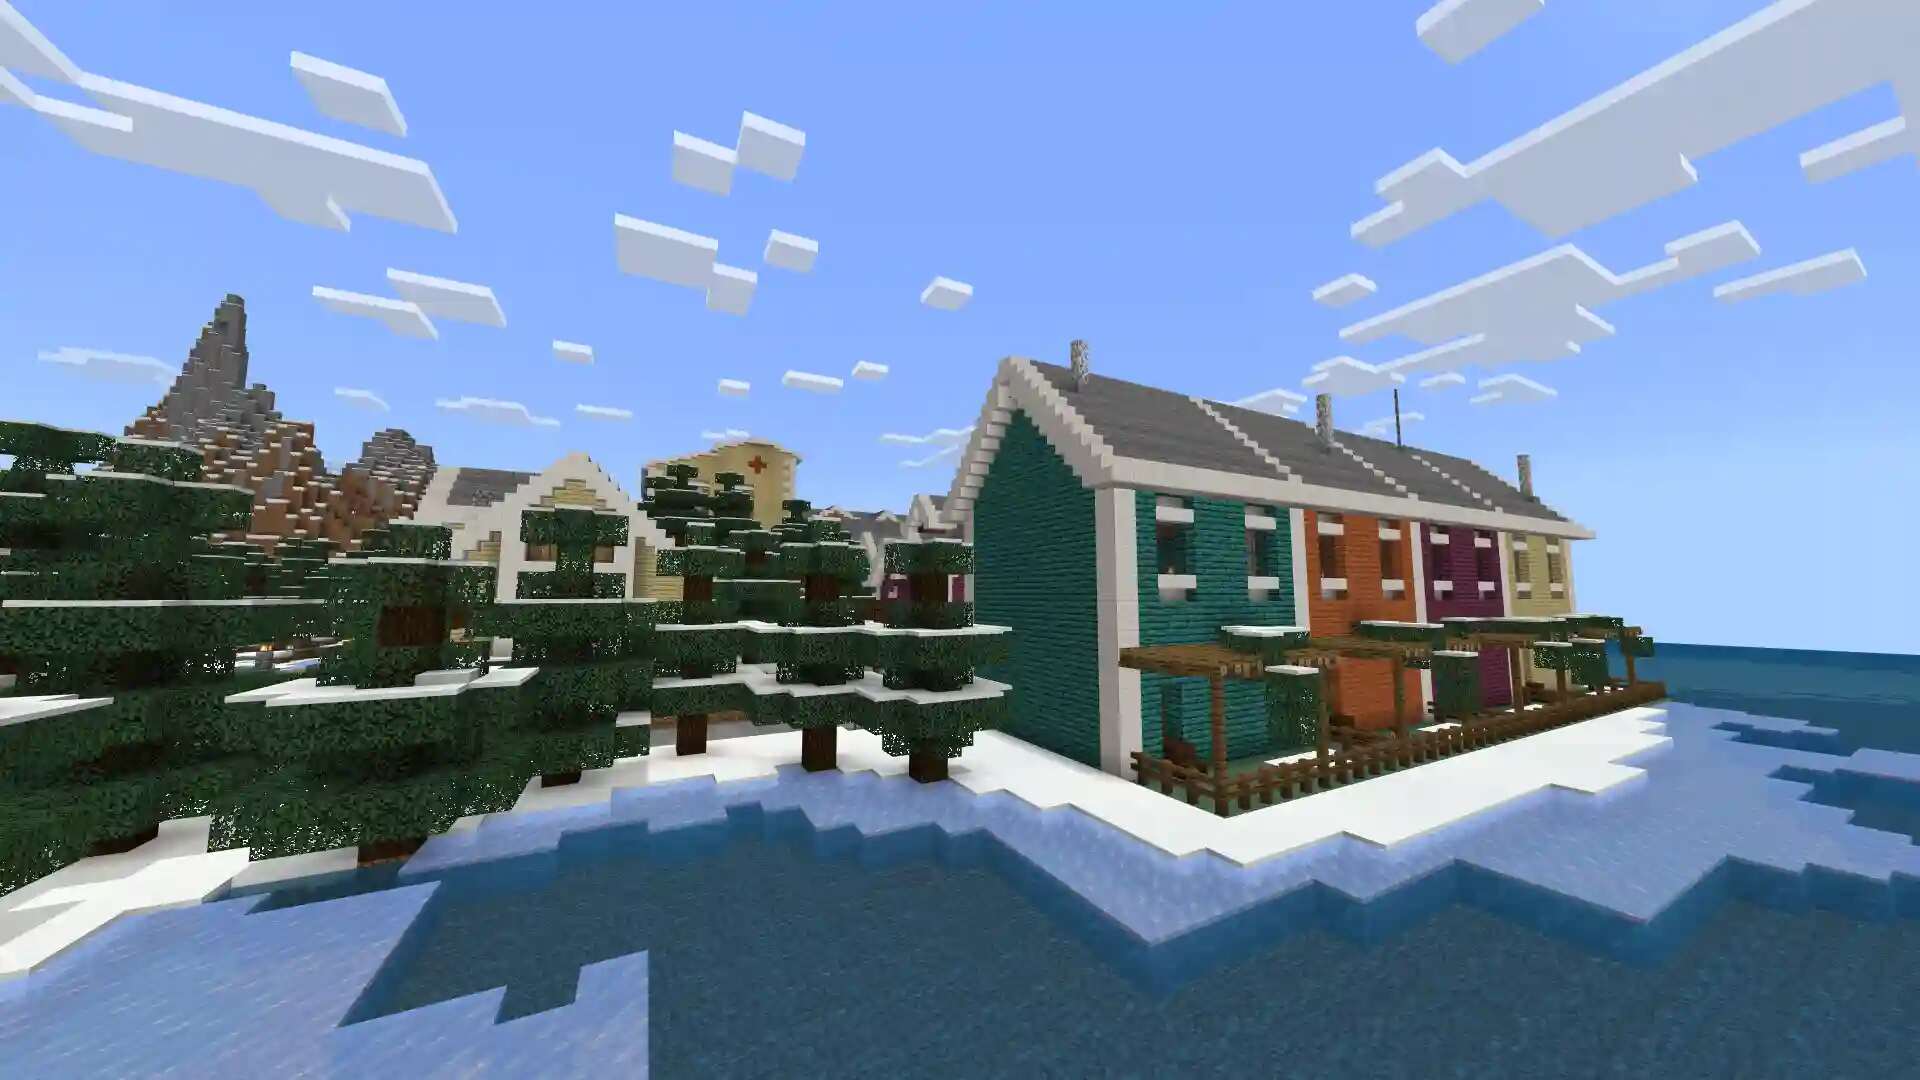 Minecraft Ice Island Map